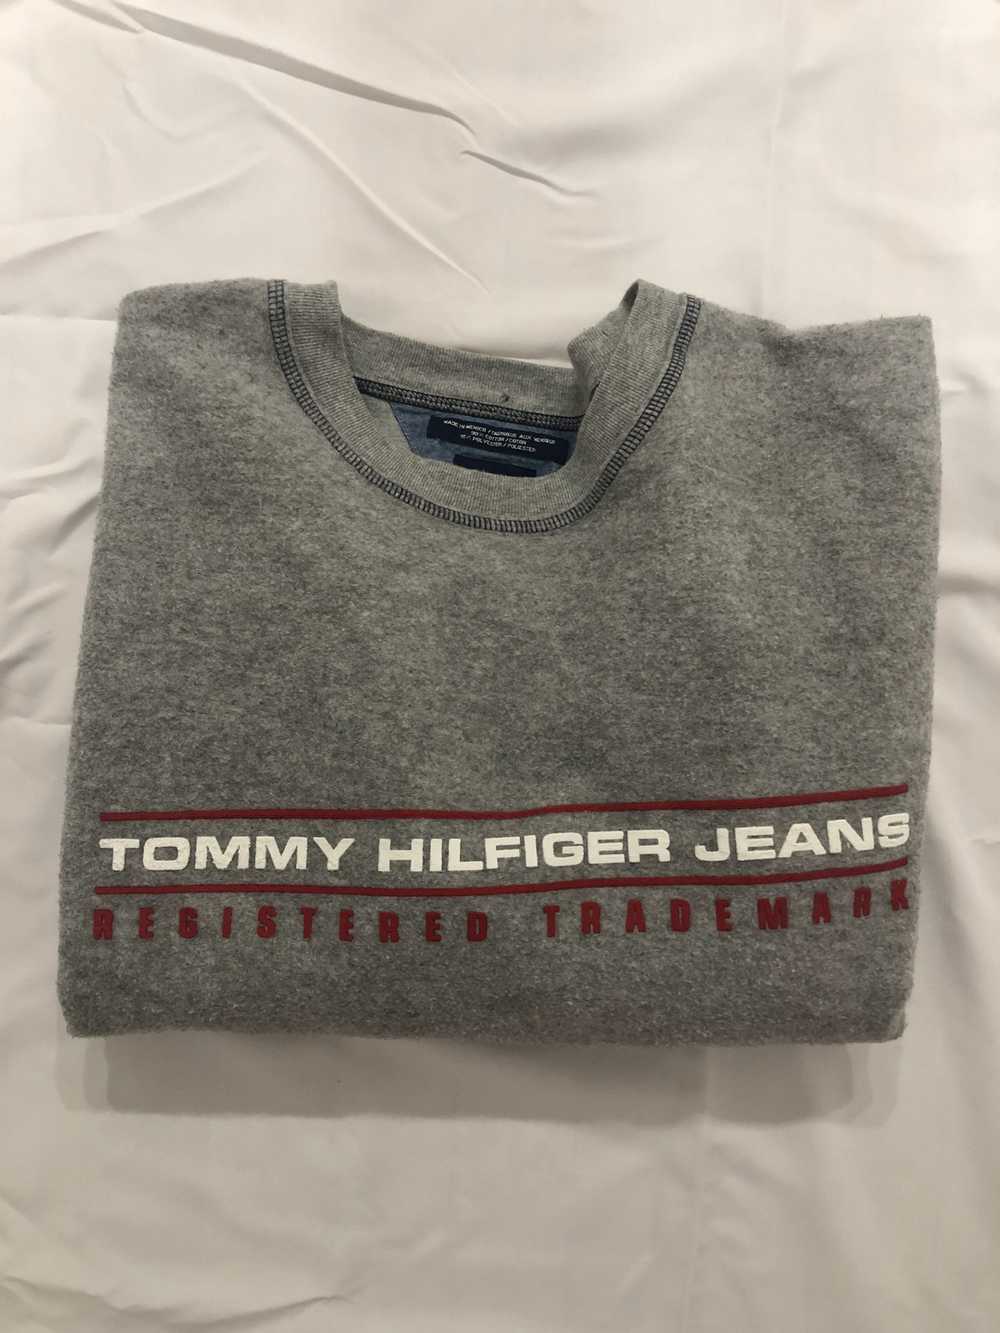 Tommy Hilfiger Tommy Hilfiger Jeans Sweater - image 4